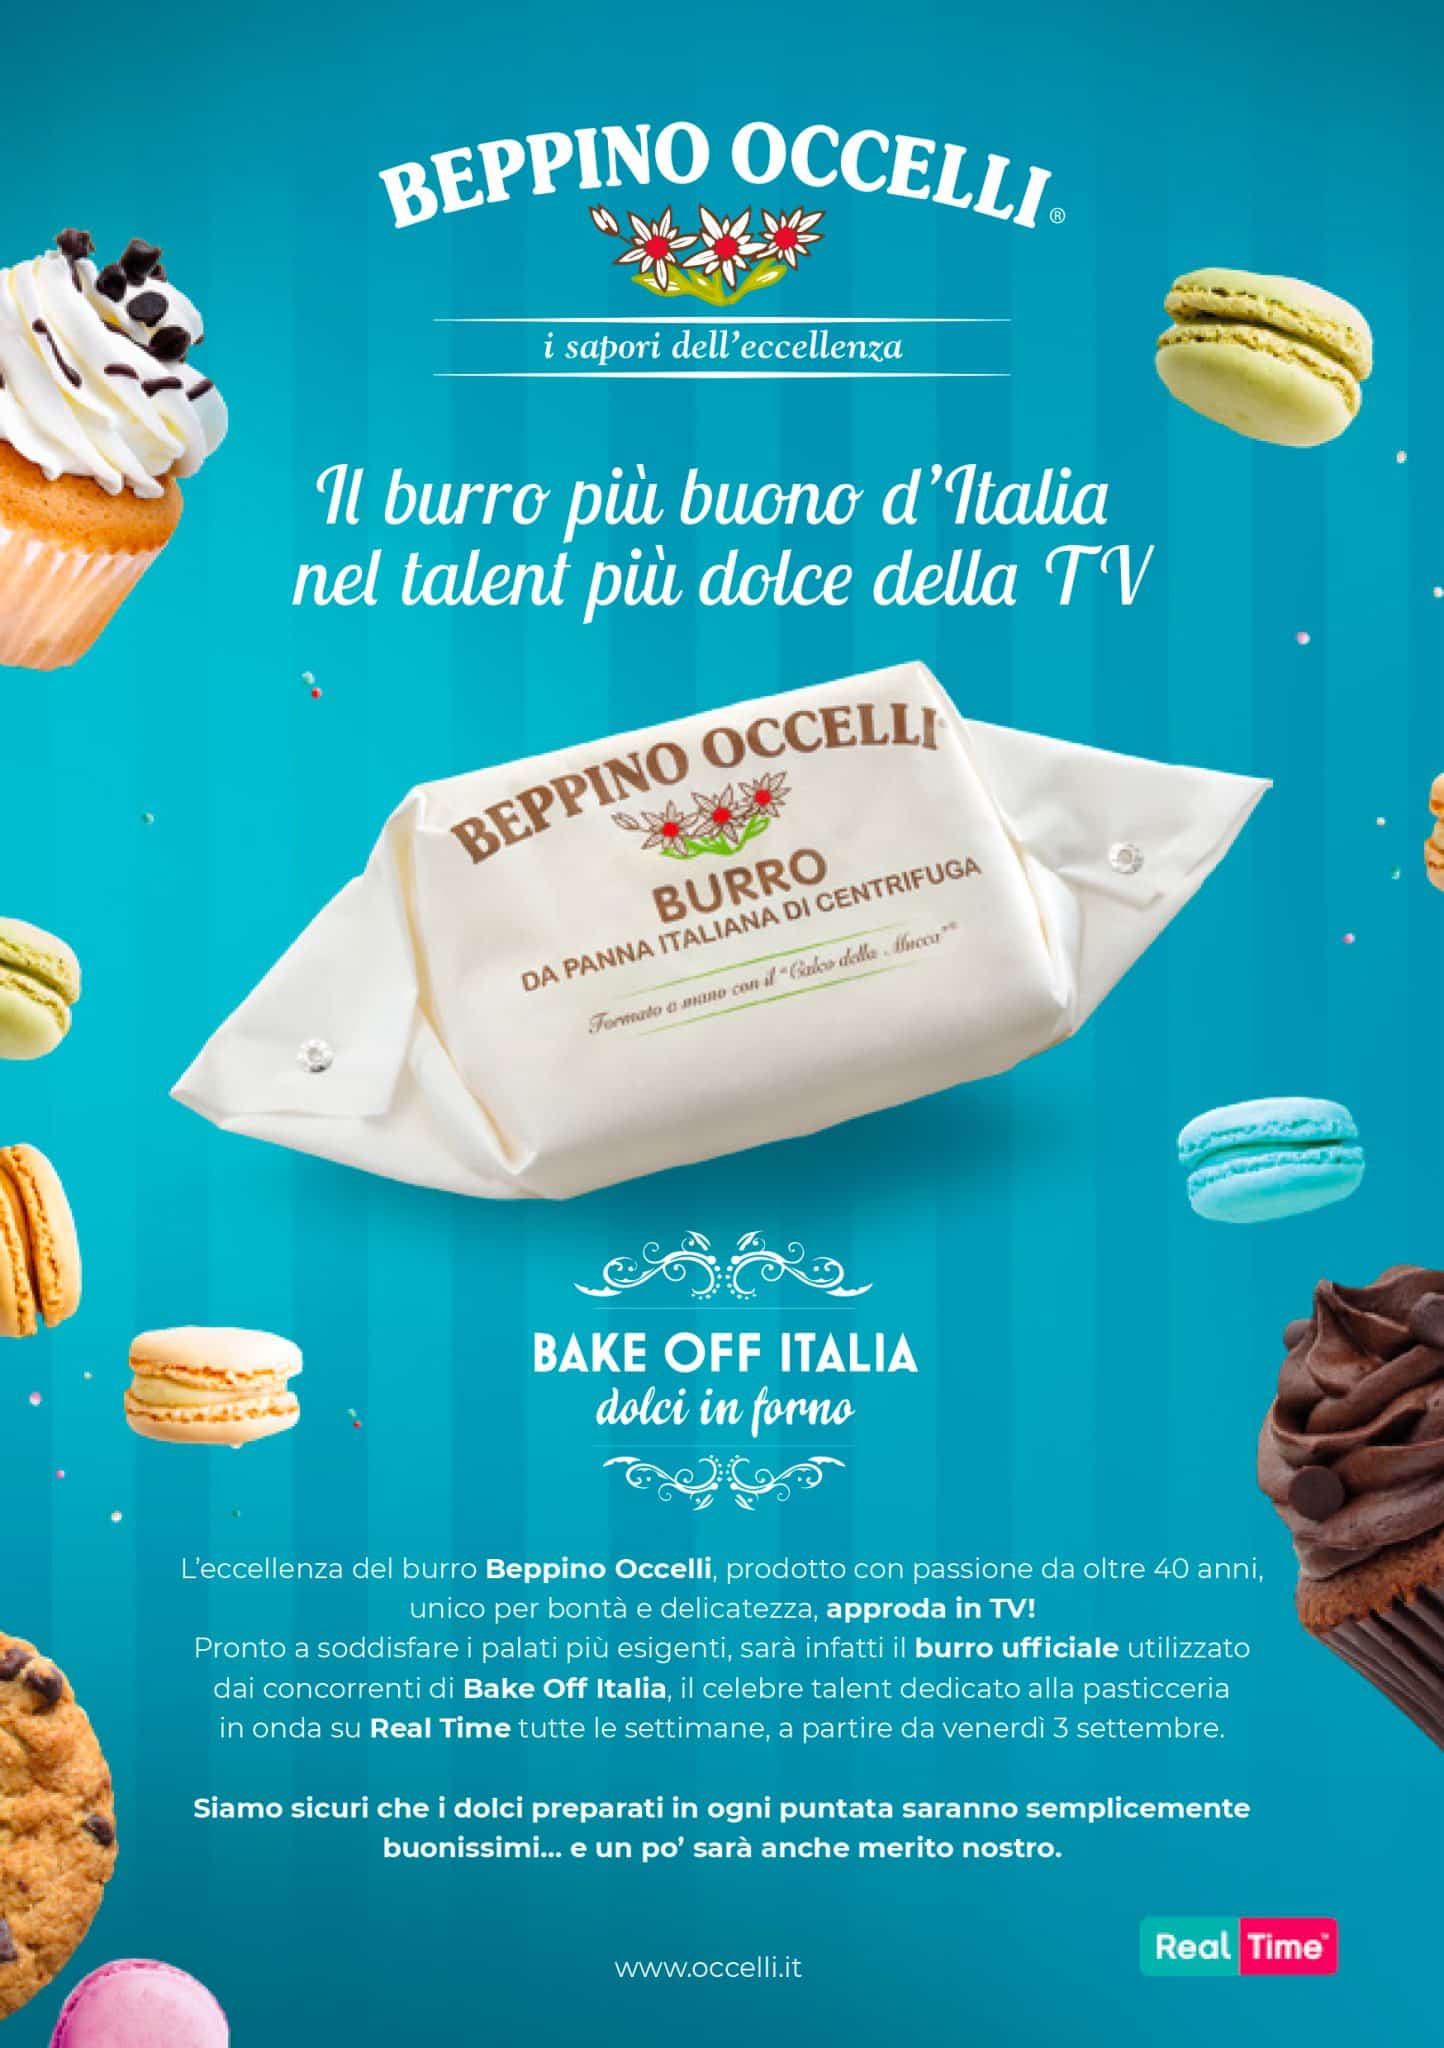 Beppino Occelli Campagna Bake OFF